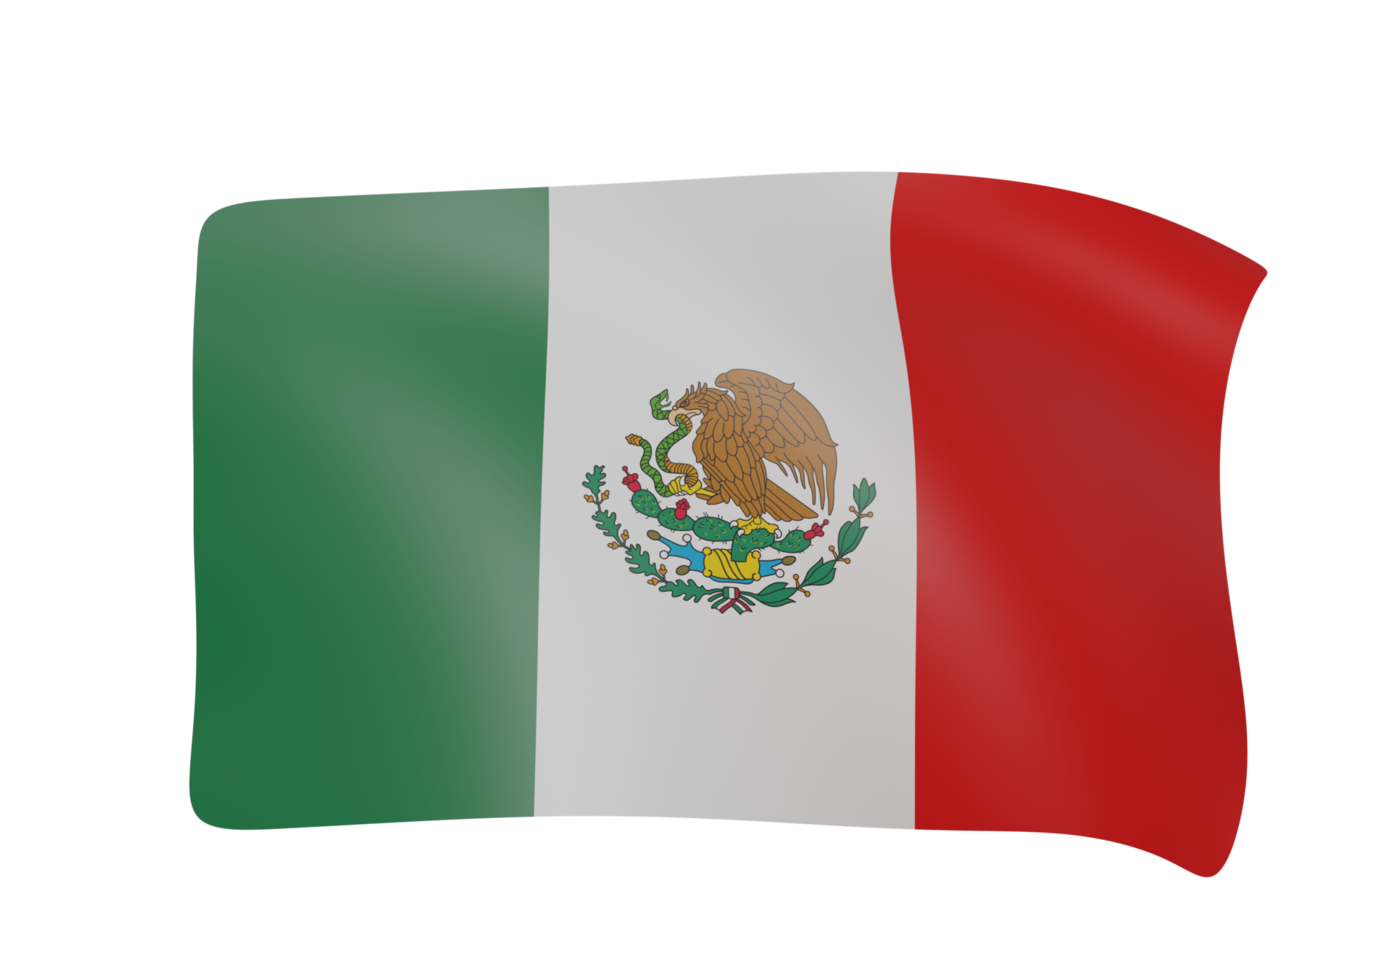 mexico vinka flagga 3d framställa png